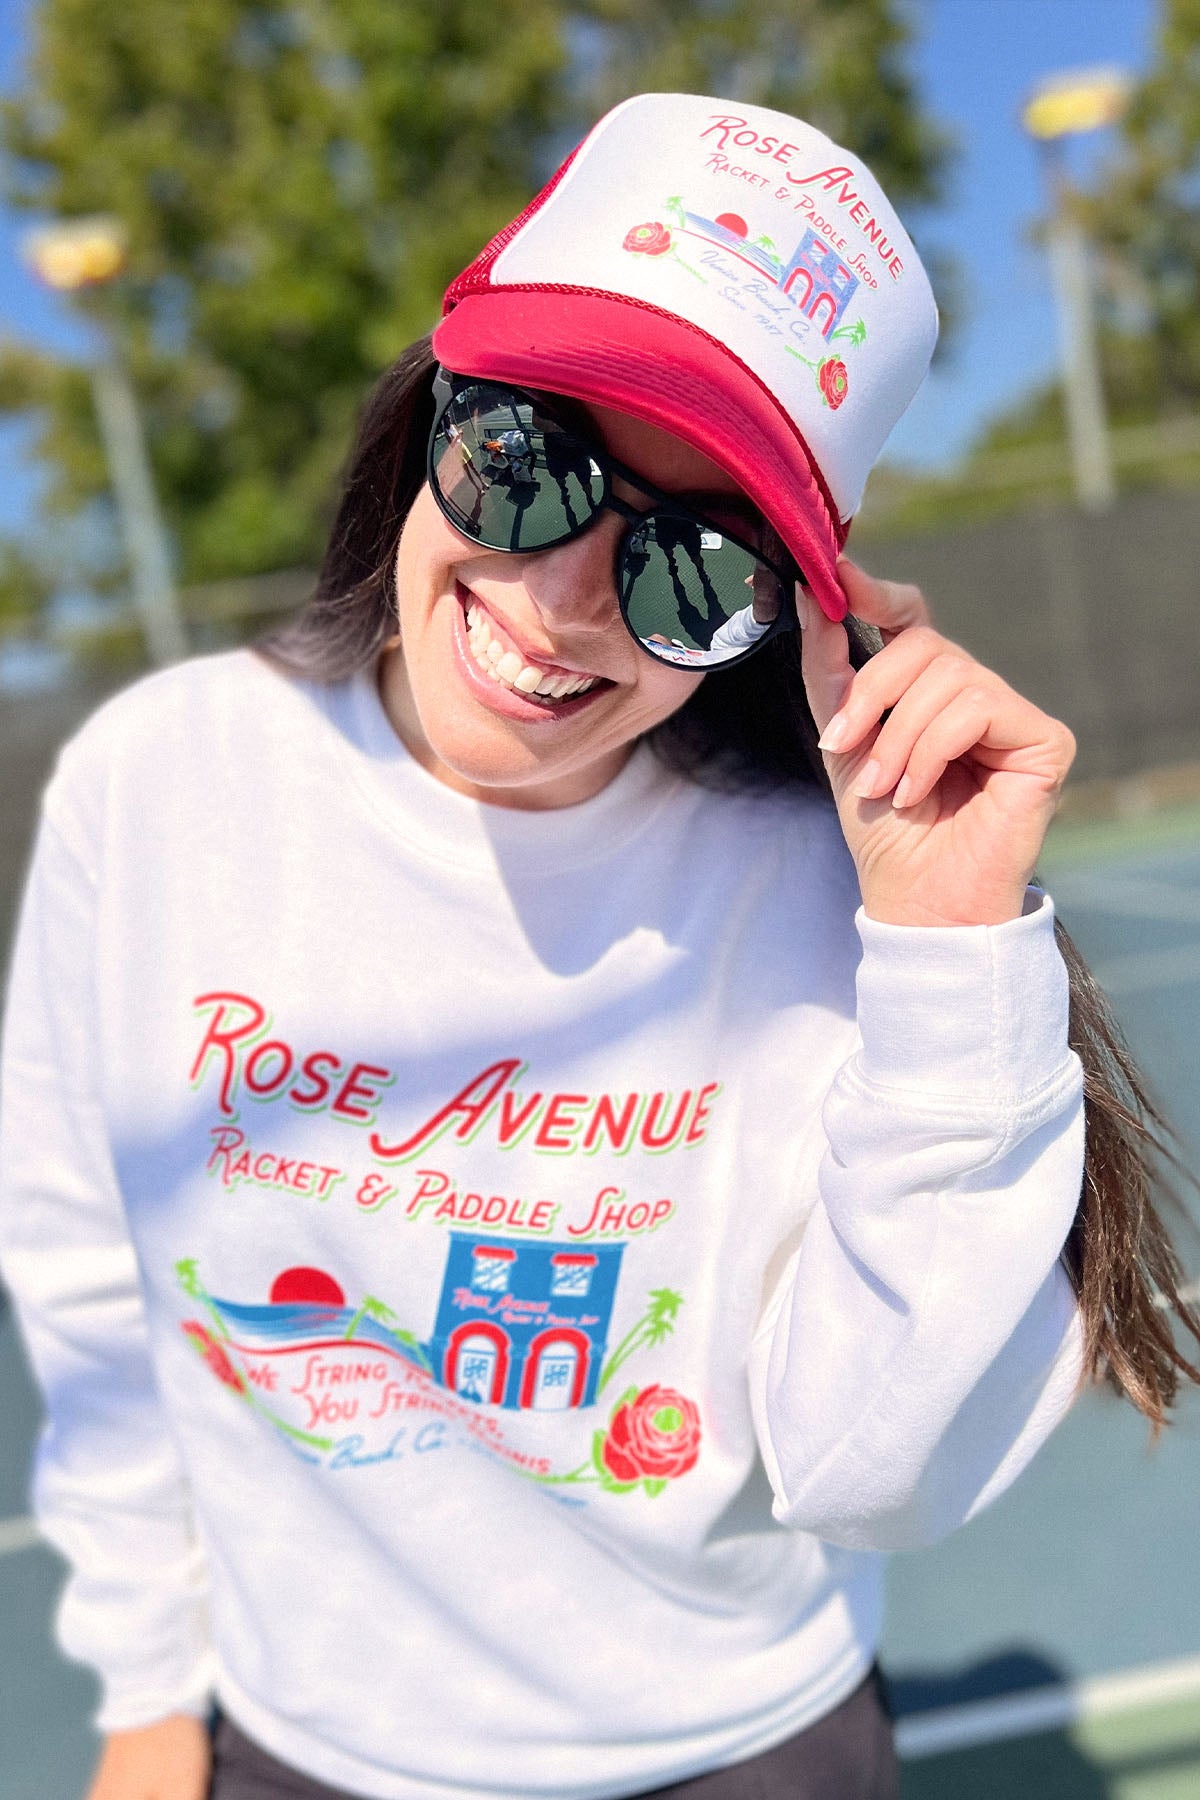 Rose Avenue Racket & Paddle Shop Trucker Hat